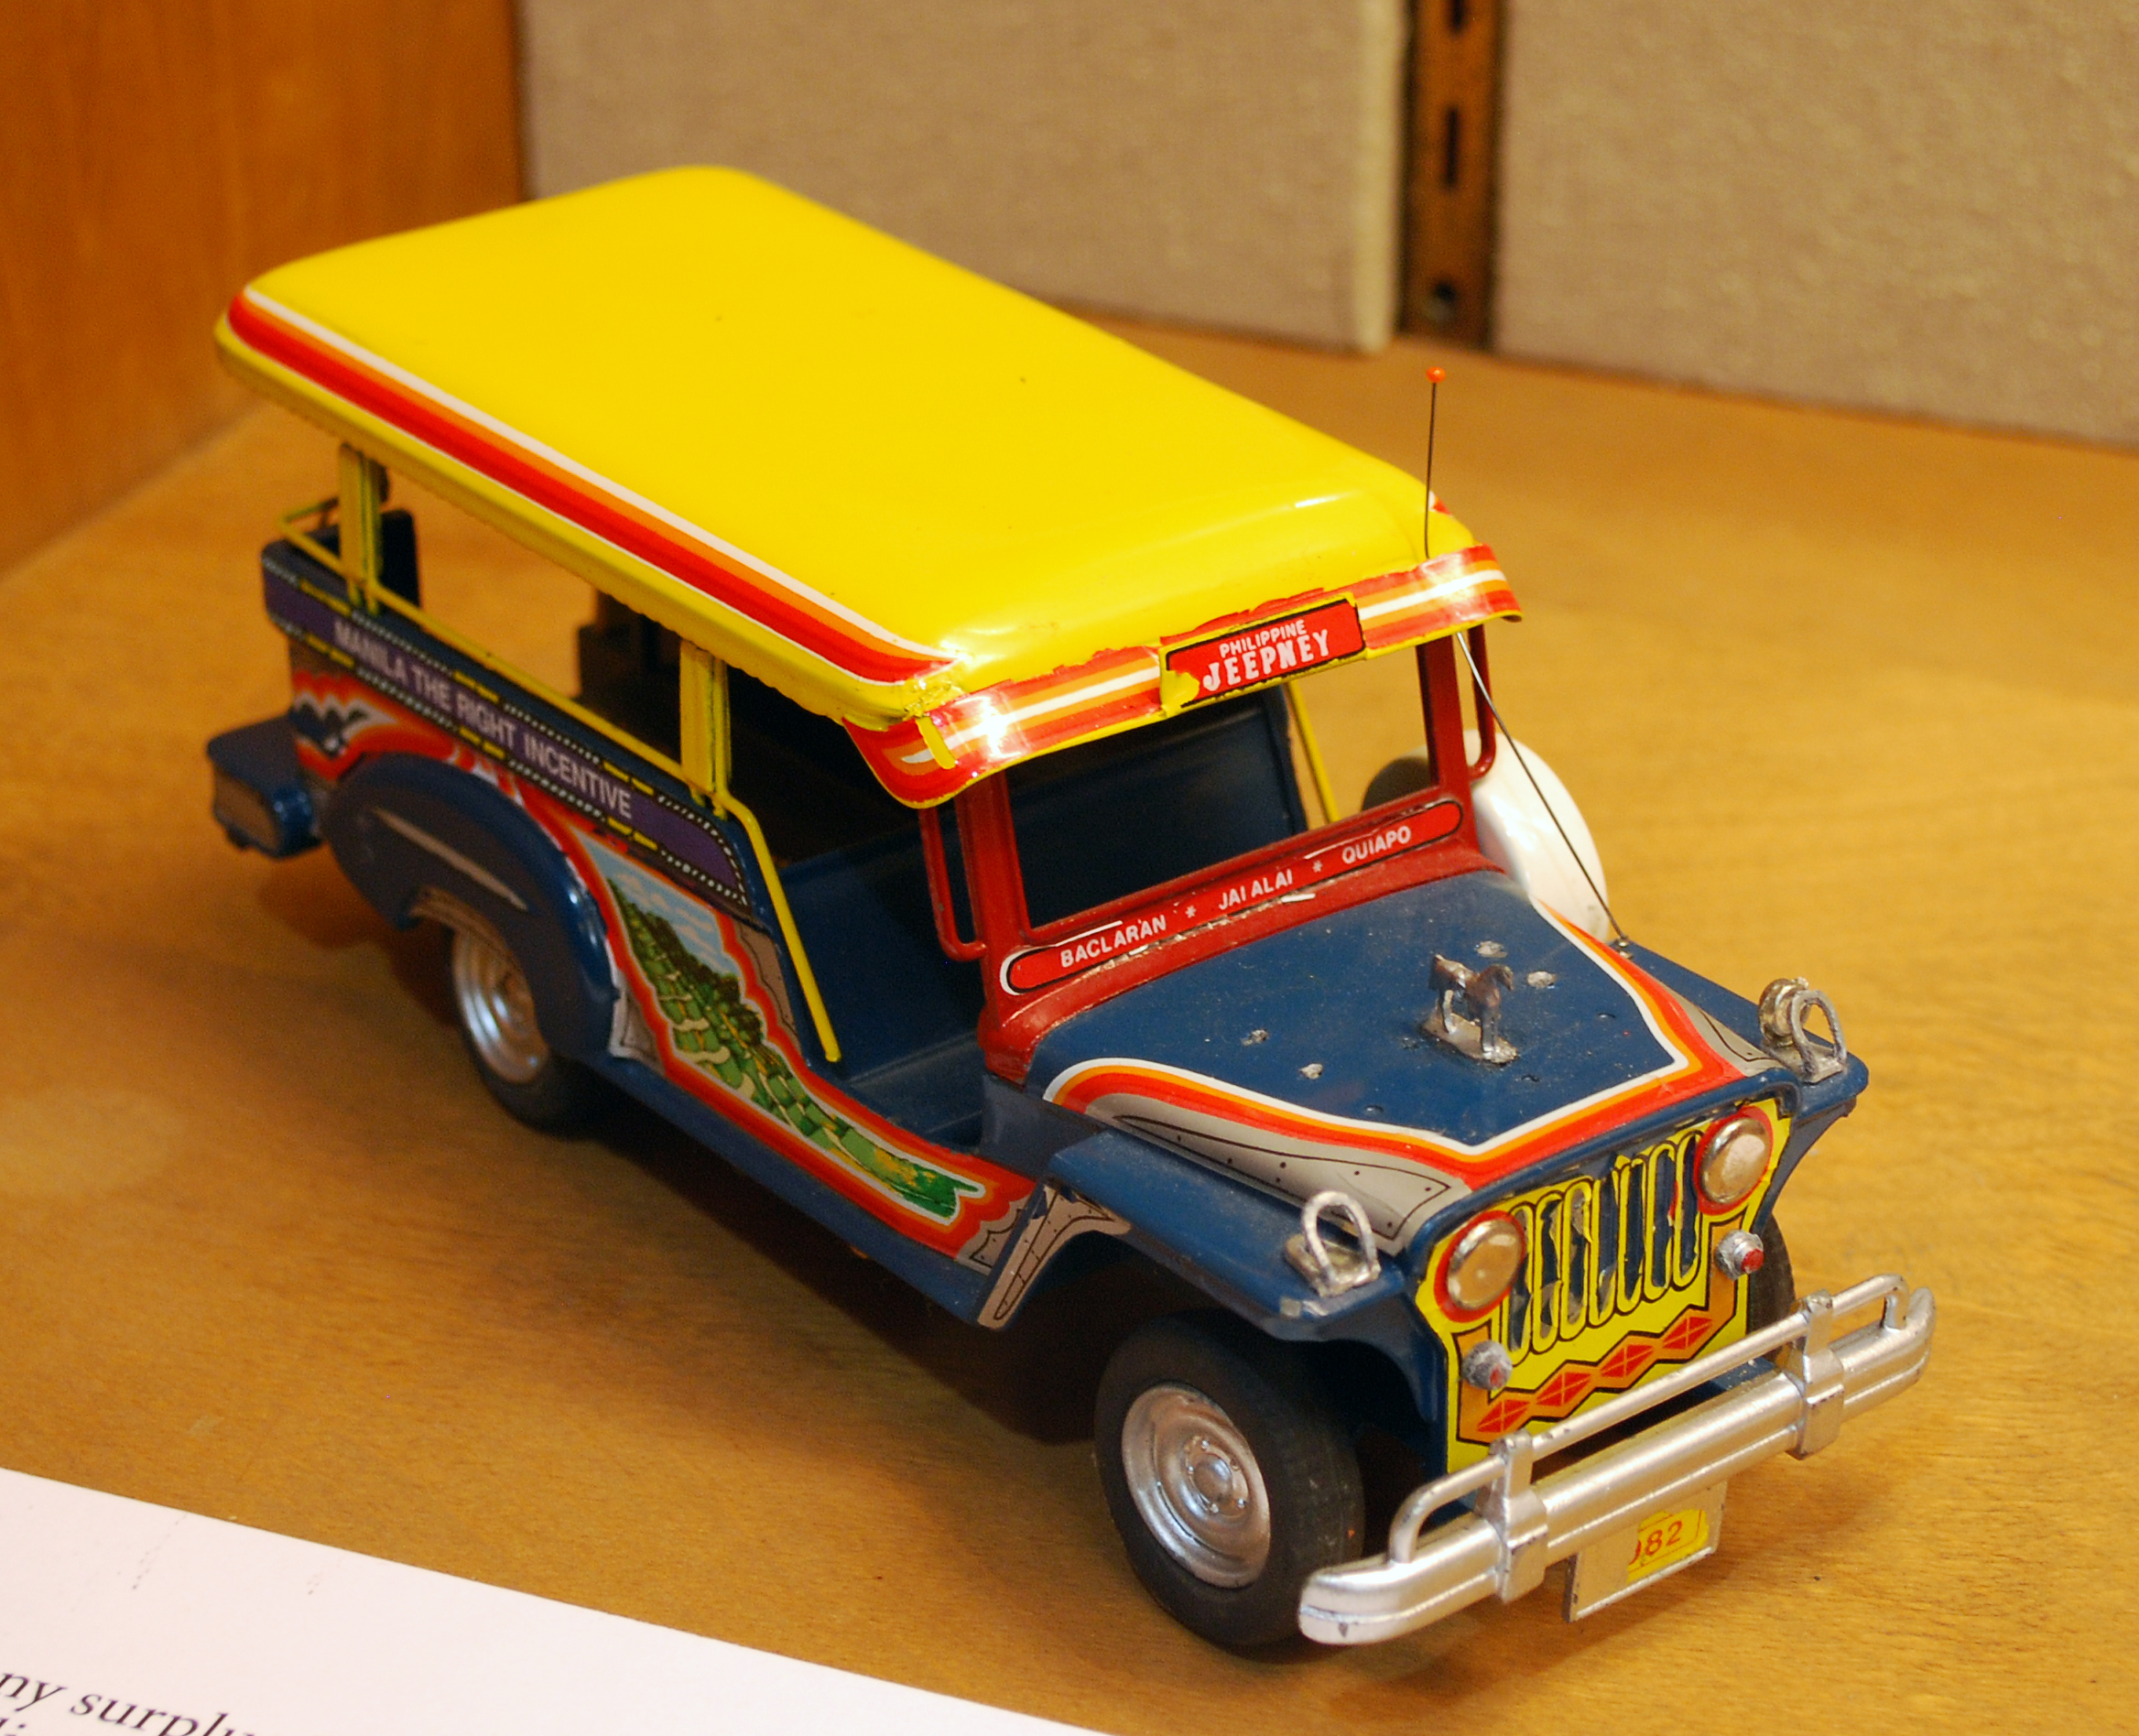 Object: Toy (Filipino Jeepney Bus)